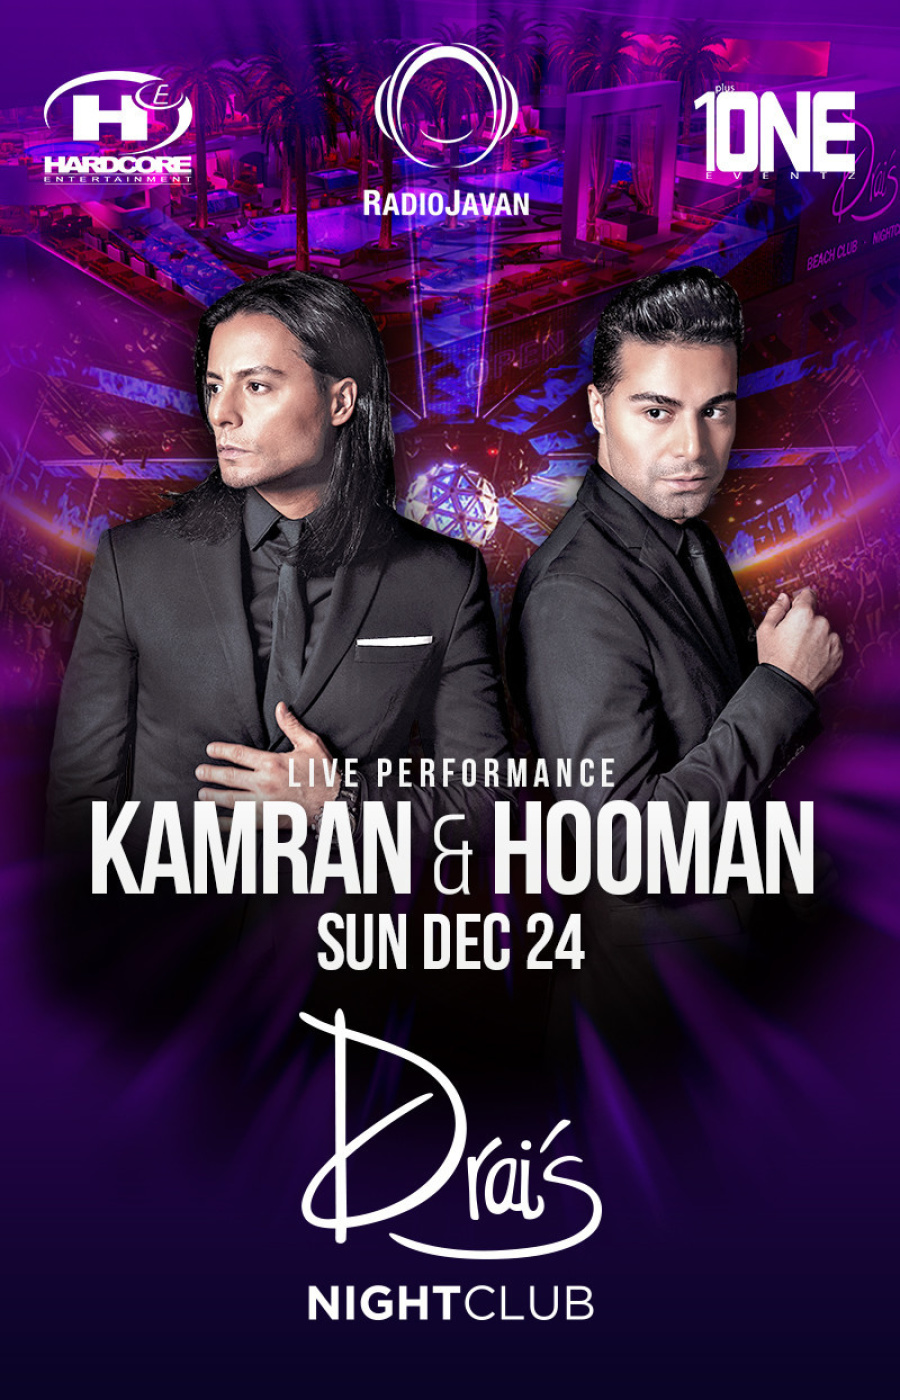 KAMRAN & HOOMAN at Drai's Nightclub thumbnail